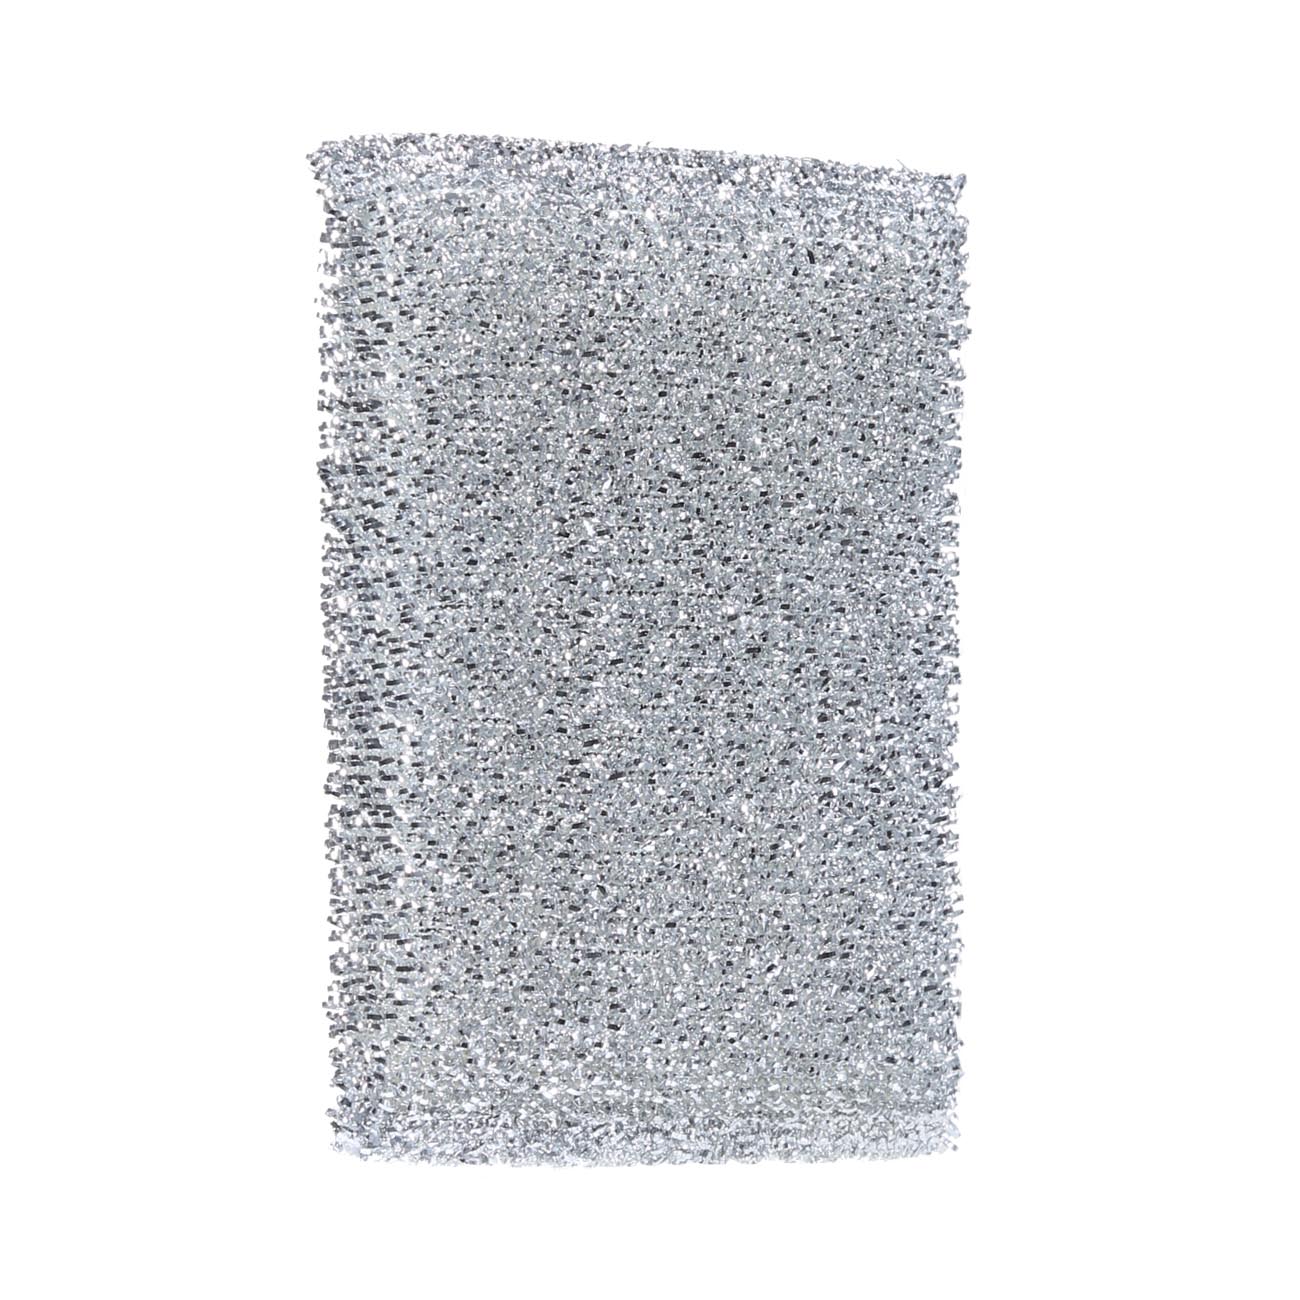 Sponge for washing dishes, 12x8 cm, dacron, silver, Clean изображение № 3